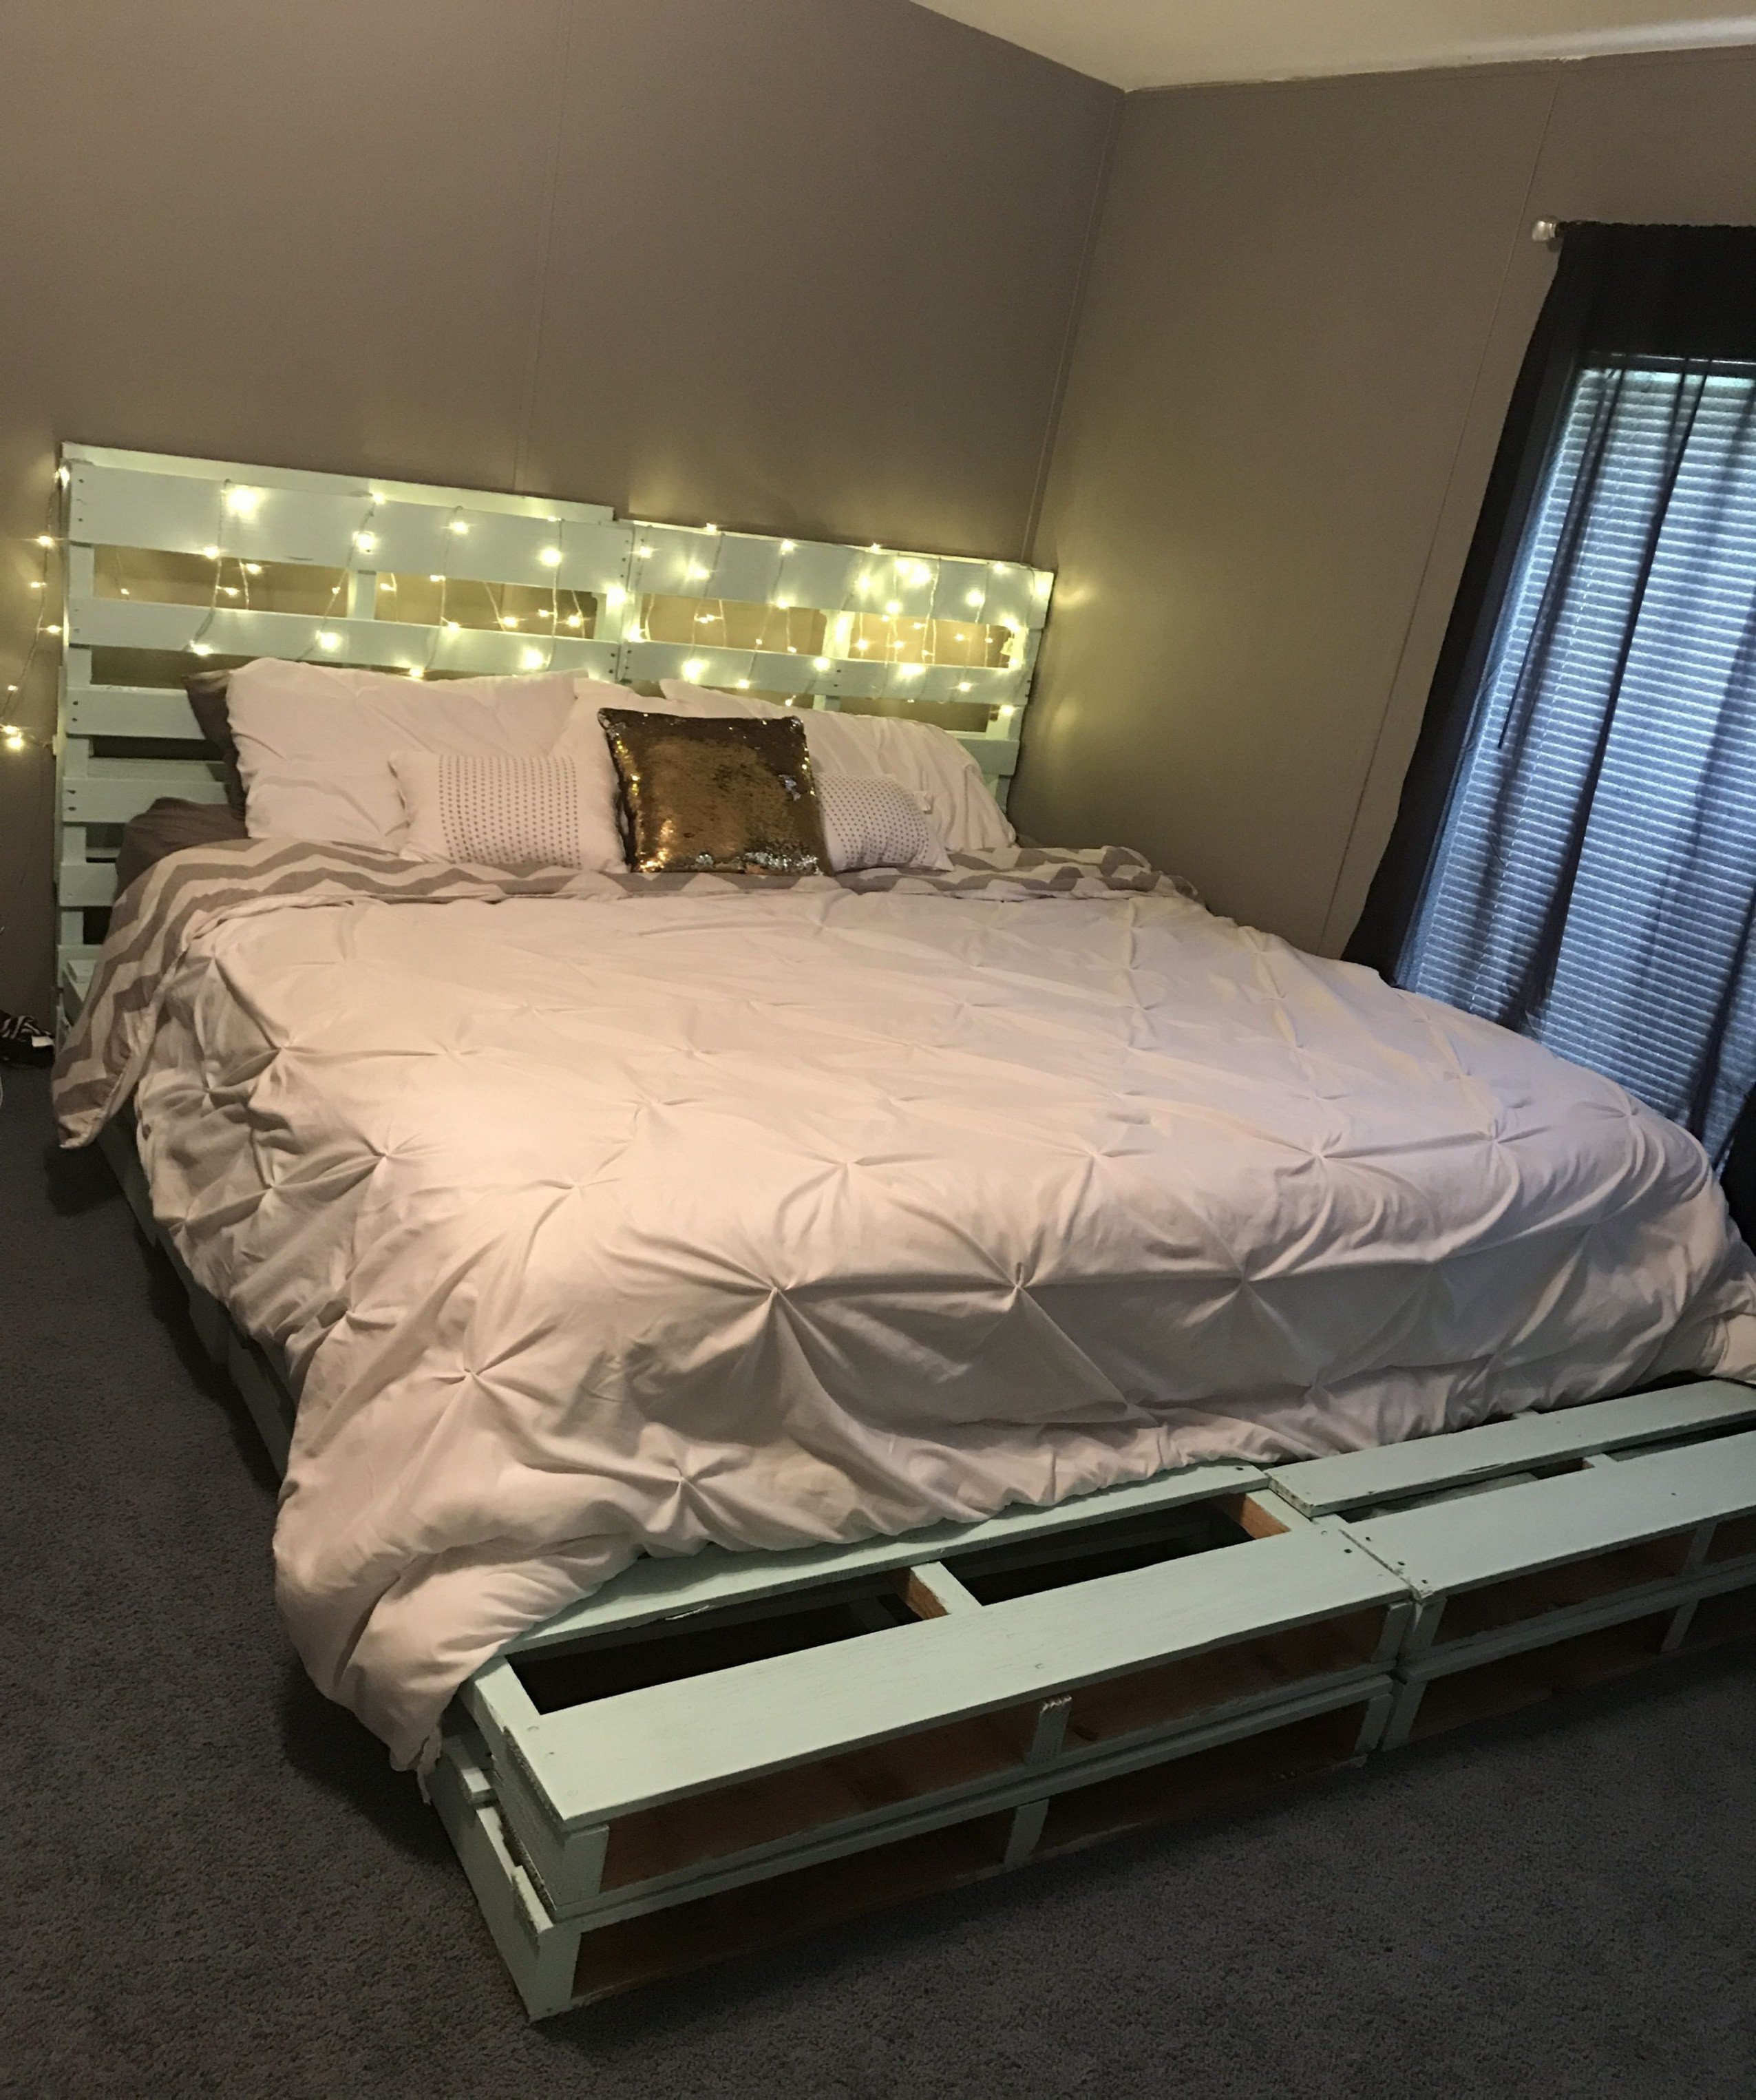 Bedroom Set King Size Inspirational Making A Pallet Bed Diy King Size Bed Frame 21 New Making A